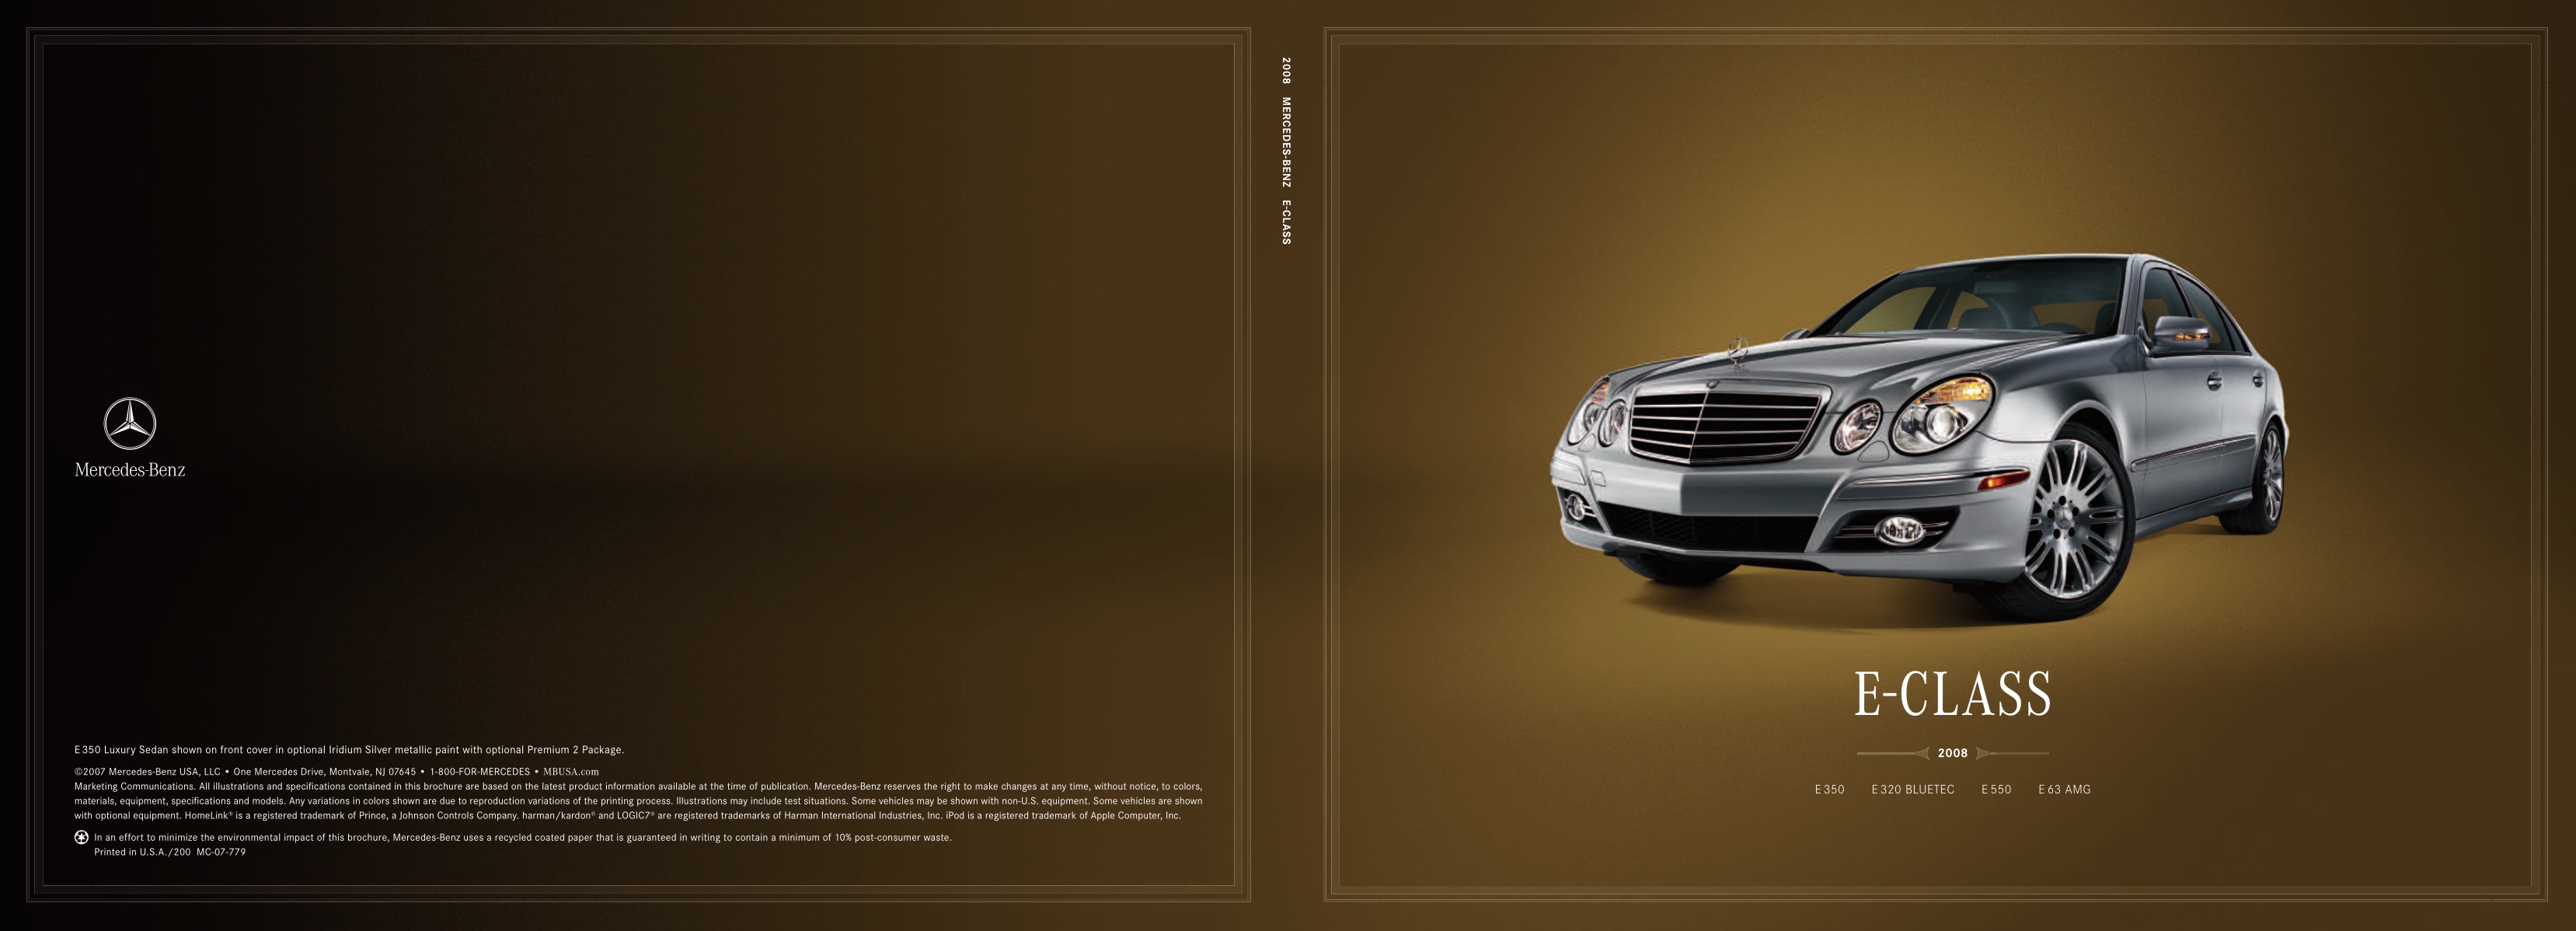 2008 Mercedes-Benz E-Class Brochure Page 1